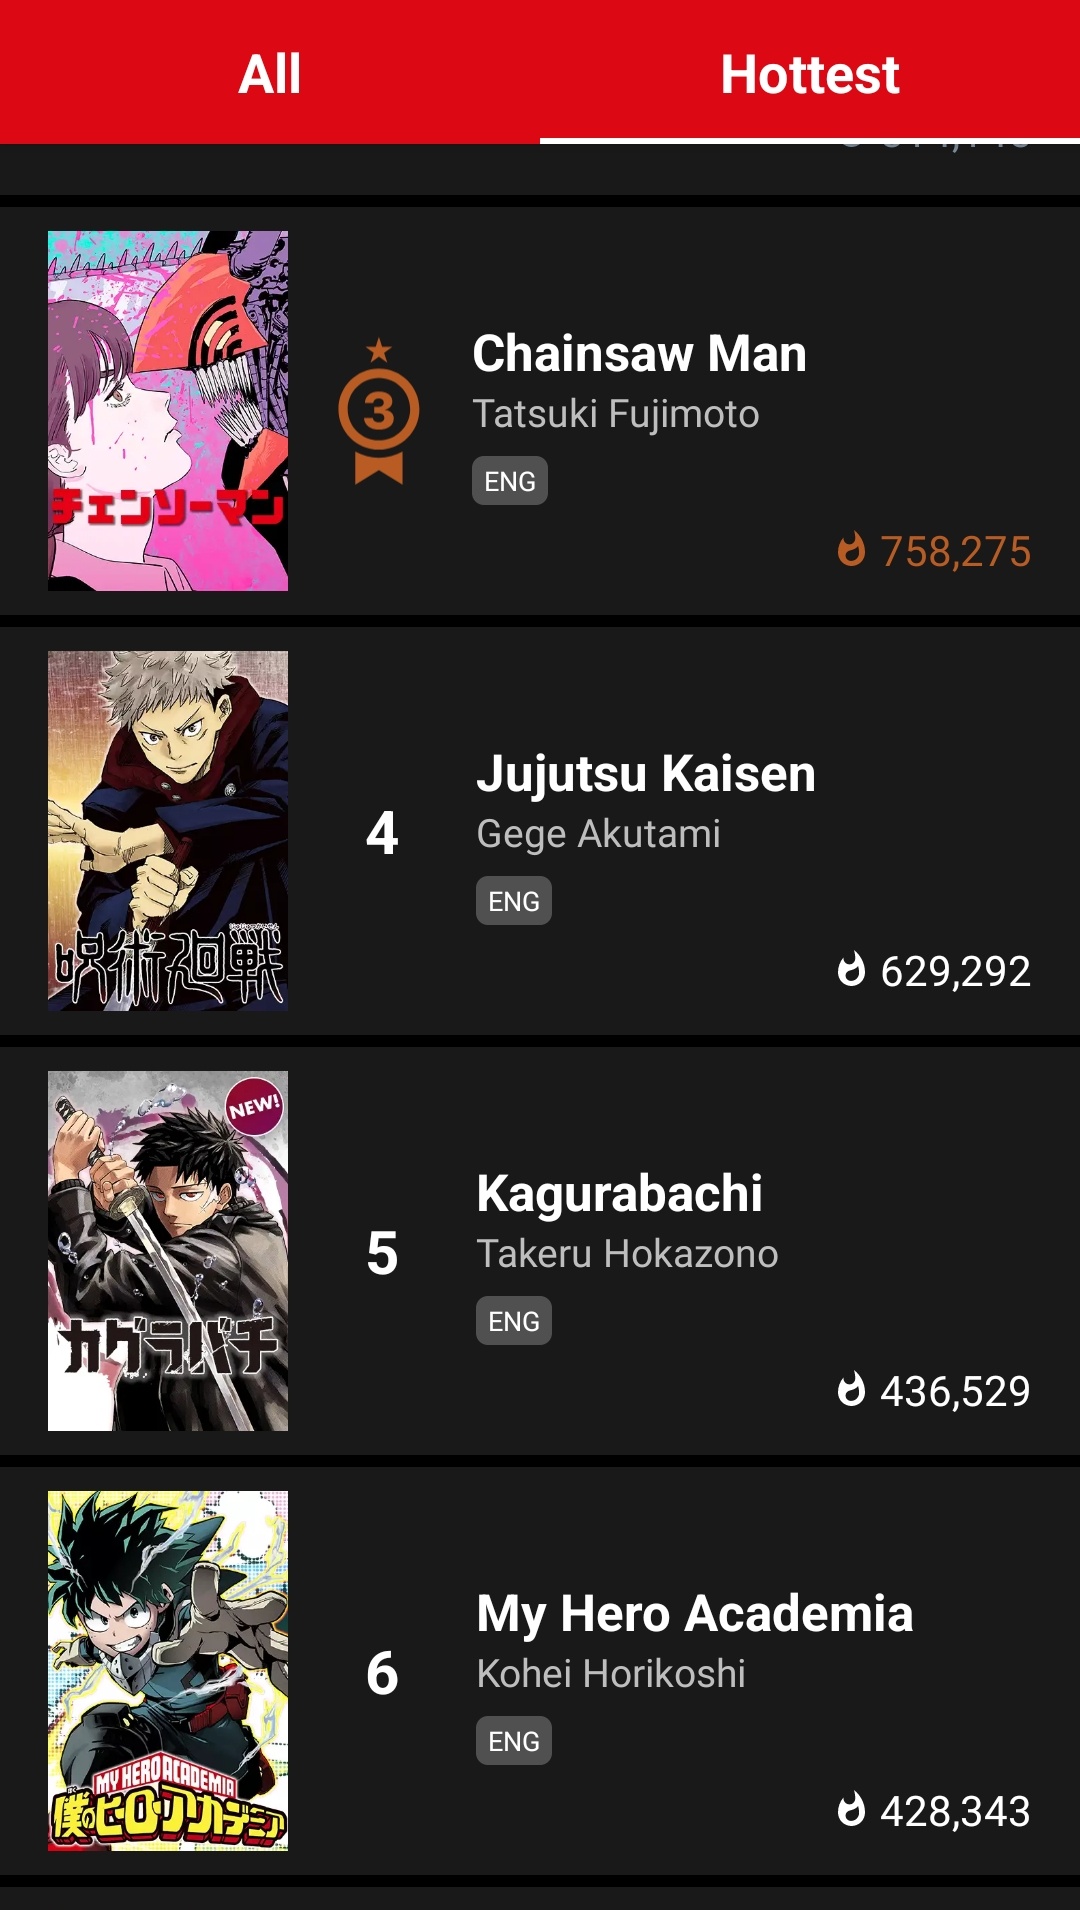 Caption: NEWS: 'Kagurabachi' has already overtaken popular manga